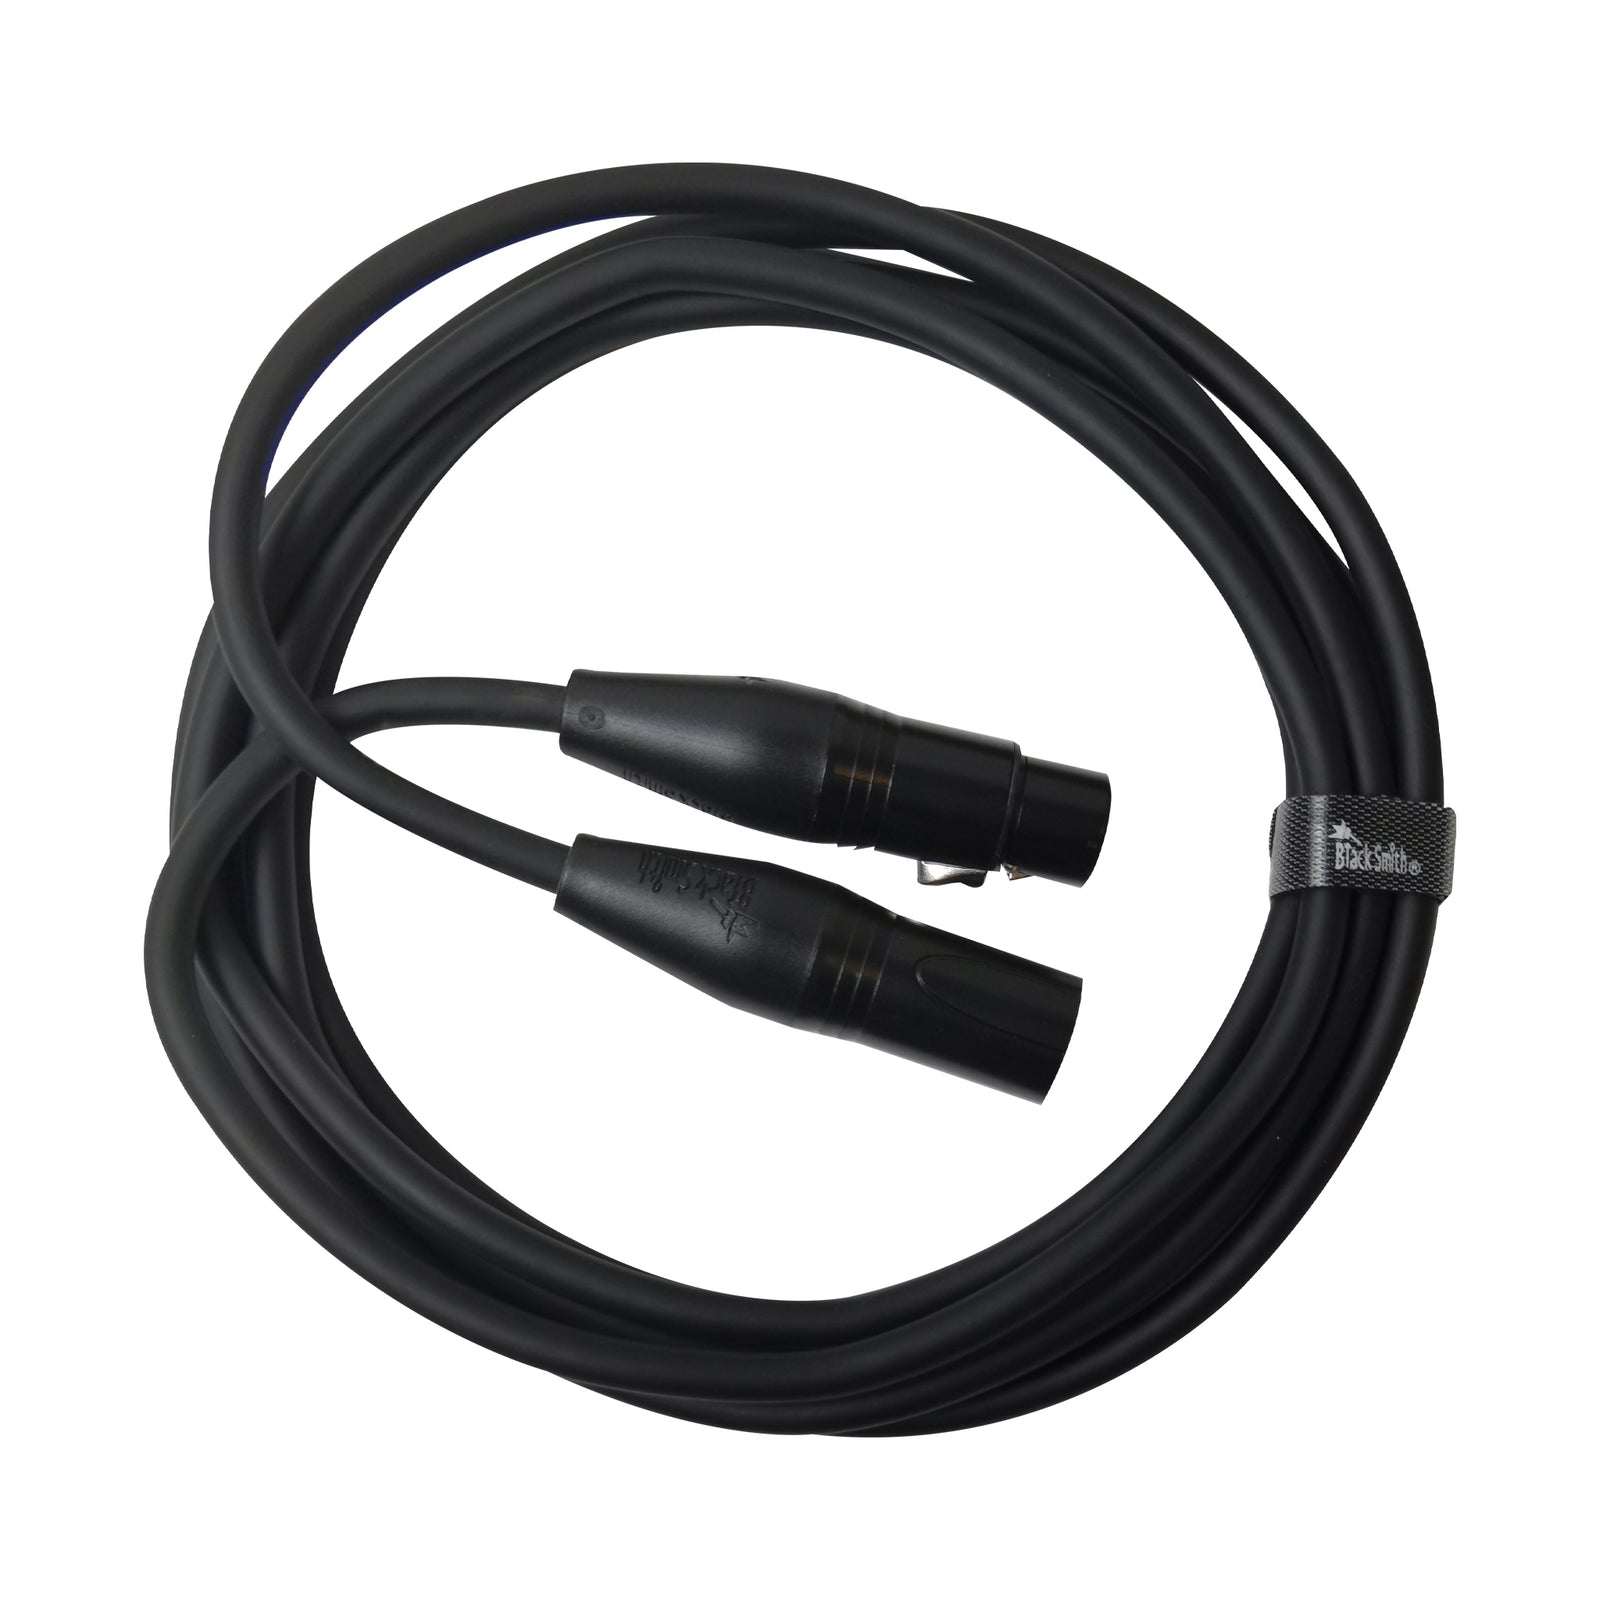 Black Smith VS-XLRFTXLRM3 Mic Cable 3M - XLR (Female) to XLR (Male)